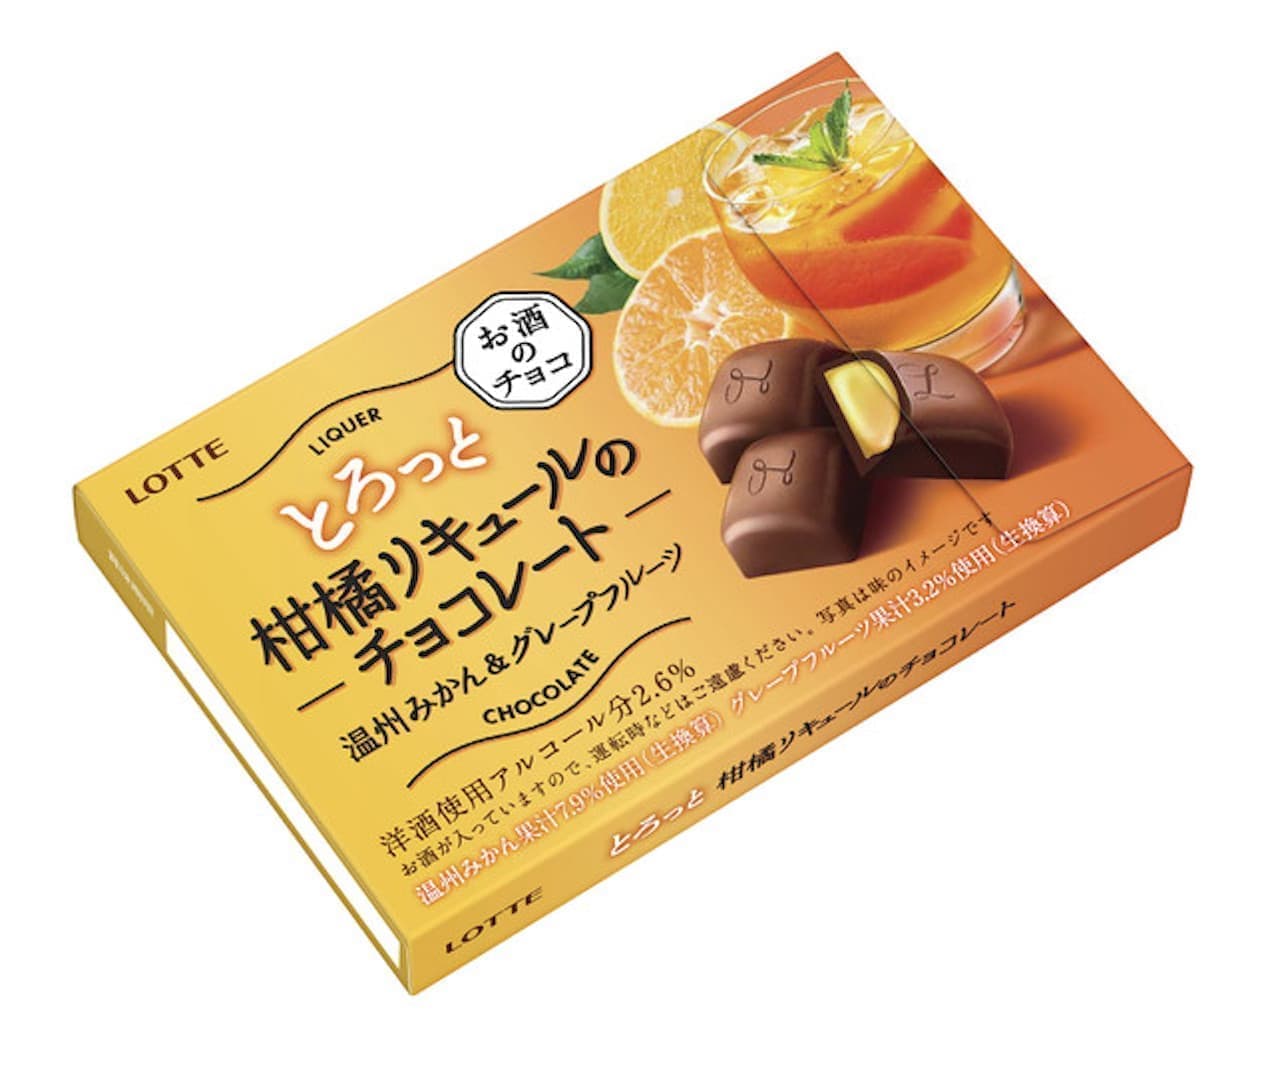 Lotte "Chocolate of citrus liqueur"